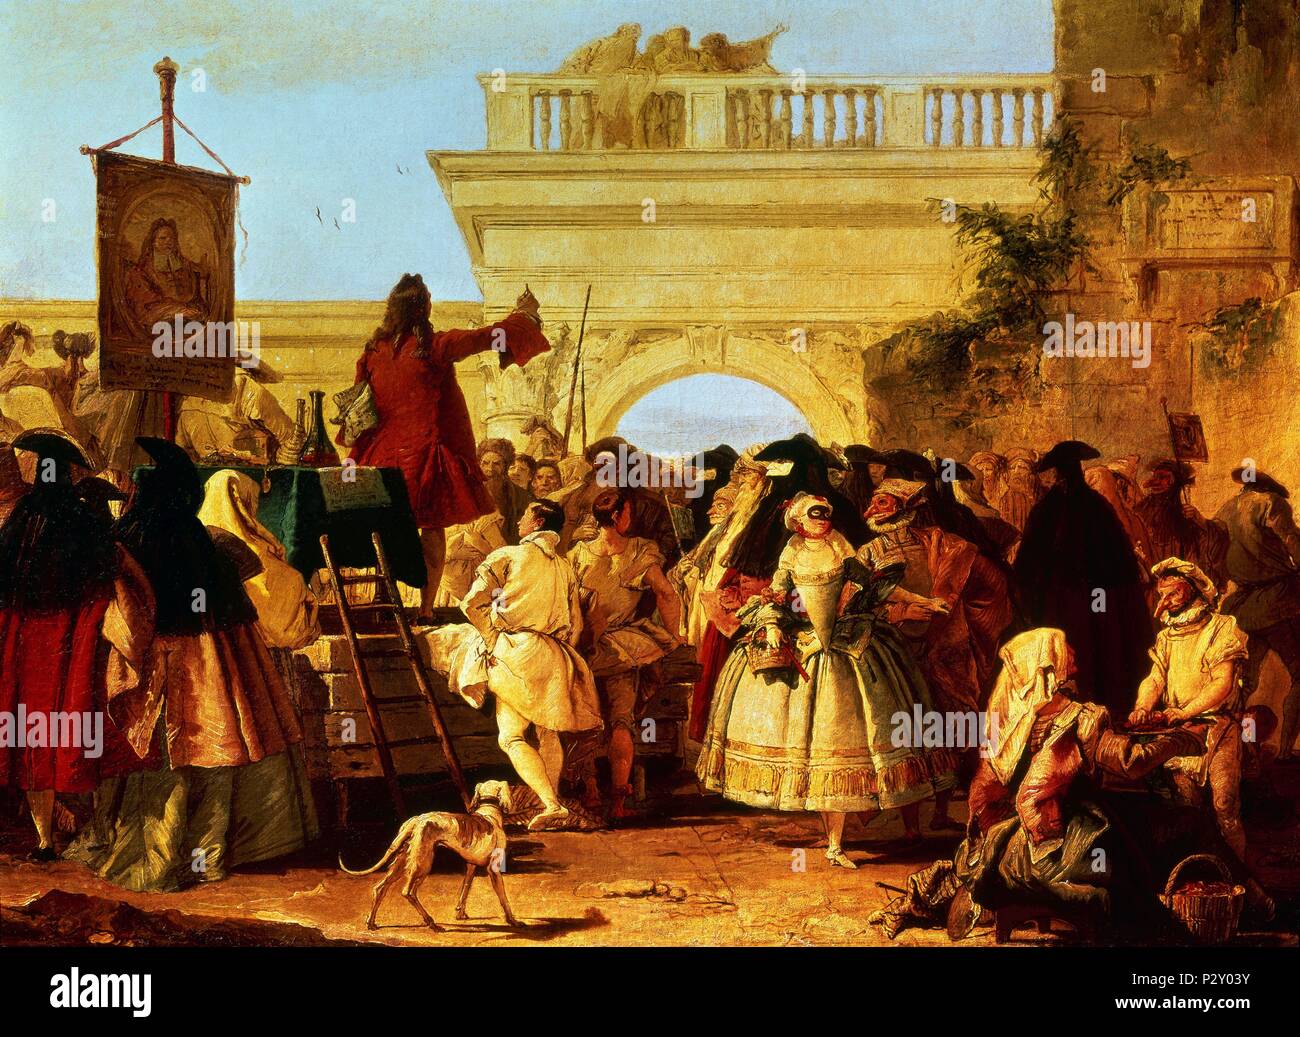 Travelling Seller in a Carnival. Barcelona, Cambo Foundation. Author: Giambattista Tiepolo (1696-1770). Location: FUNDACION CAMBO, BARCELONA, SPAIN. Stock Photo